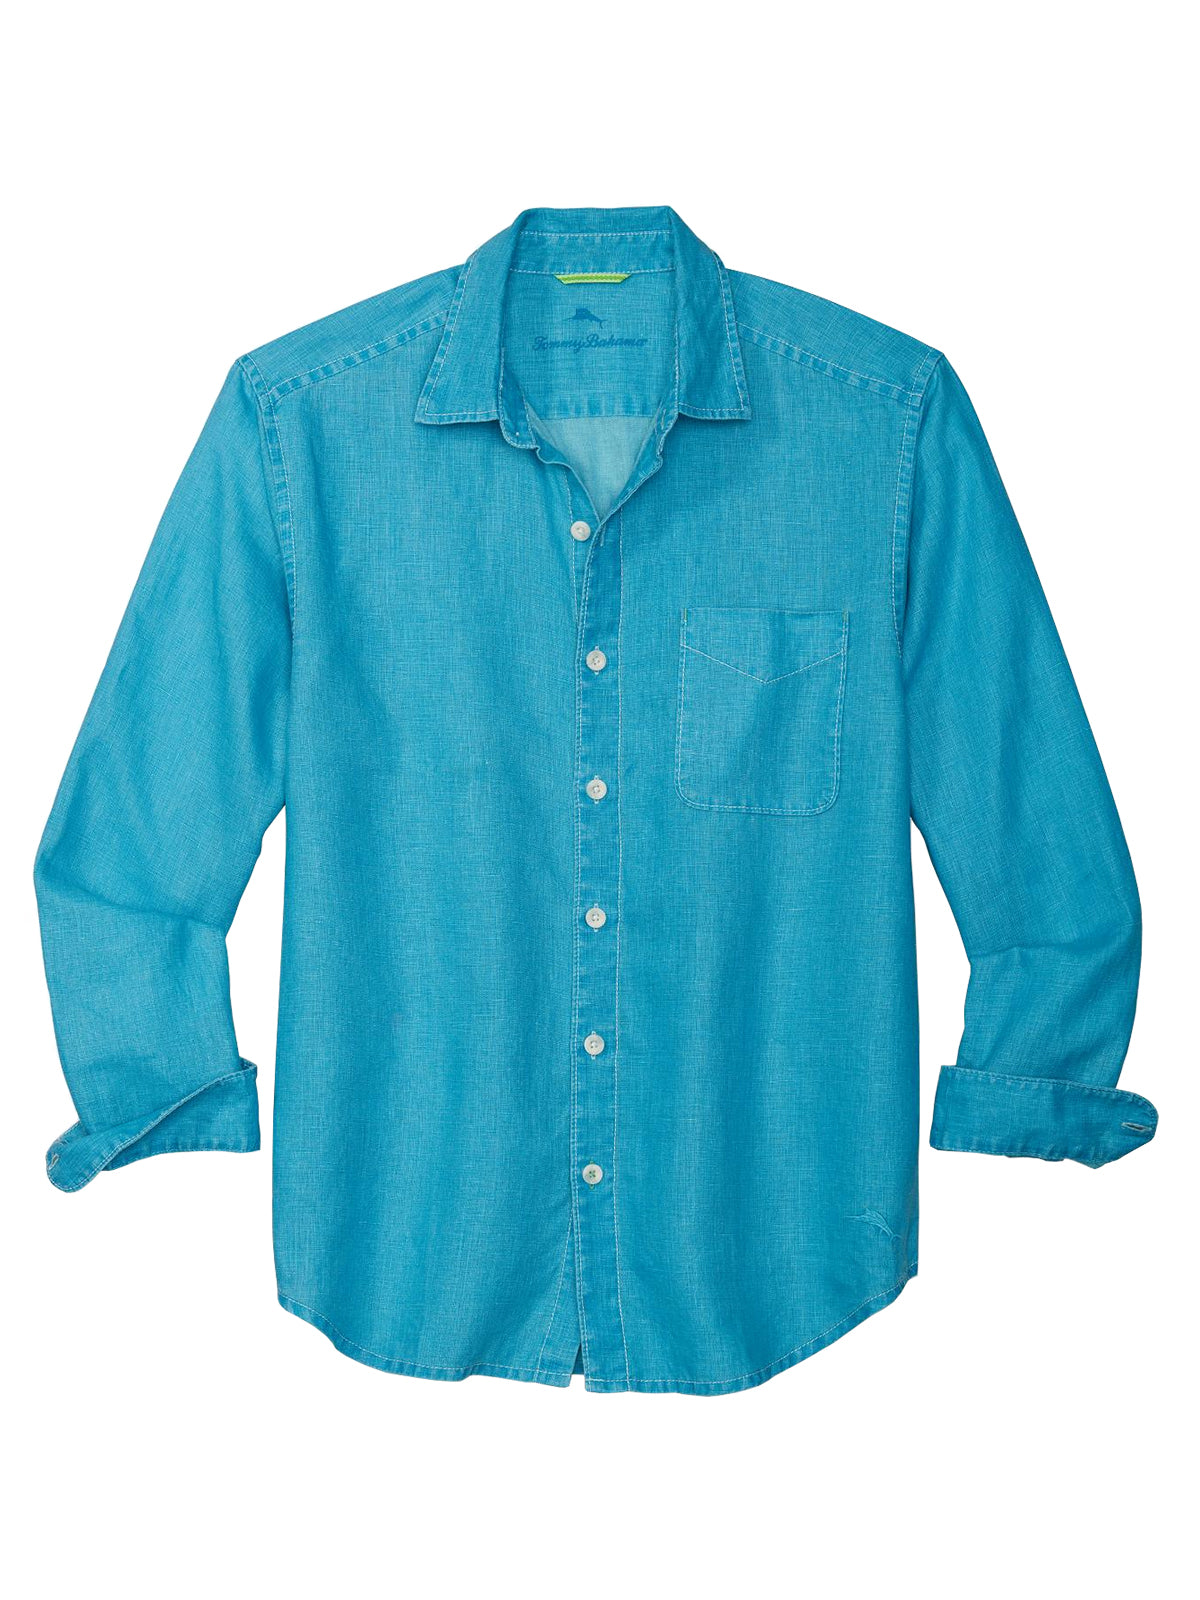 Tommy Bahama 100% Linen Long Sleeve Sea Glass Breezer Shirt in Dark Aqua